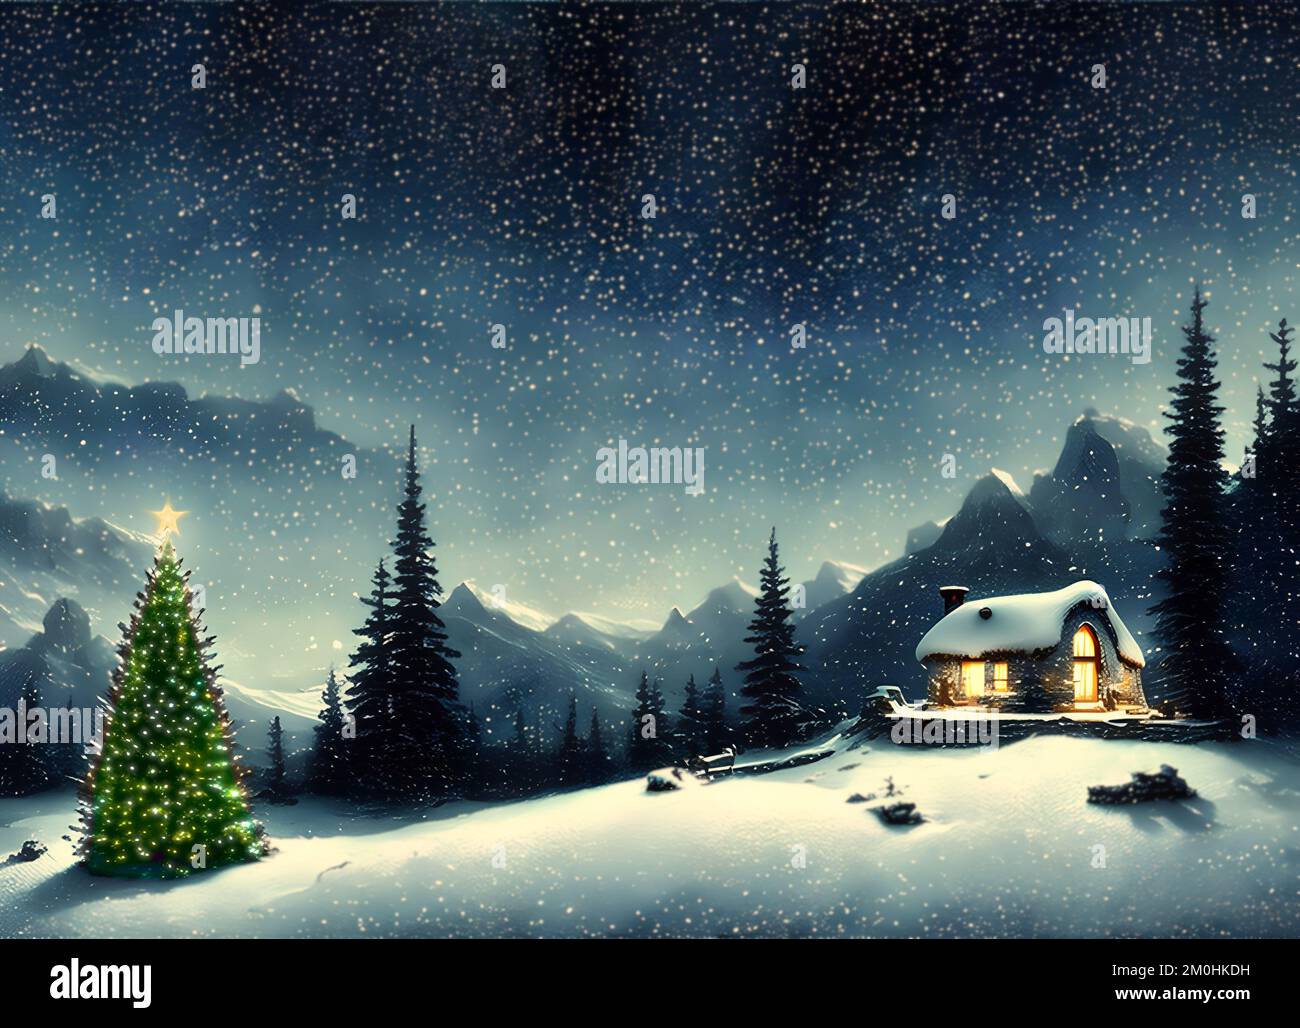 Mountain landscape at Christmas time - digital illustration Stock Photo